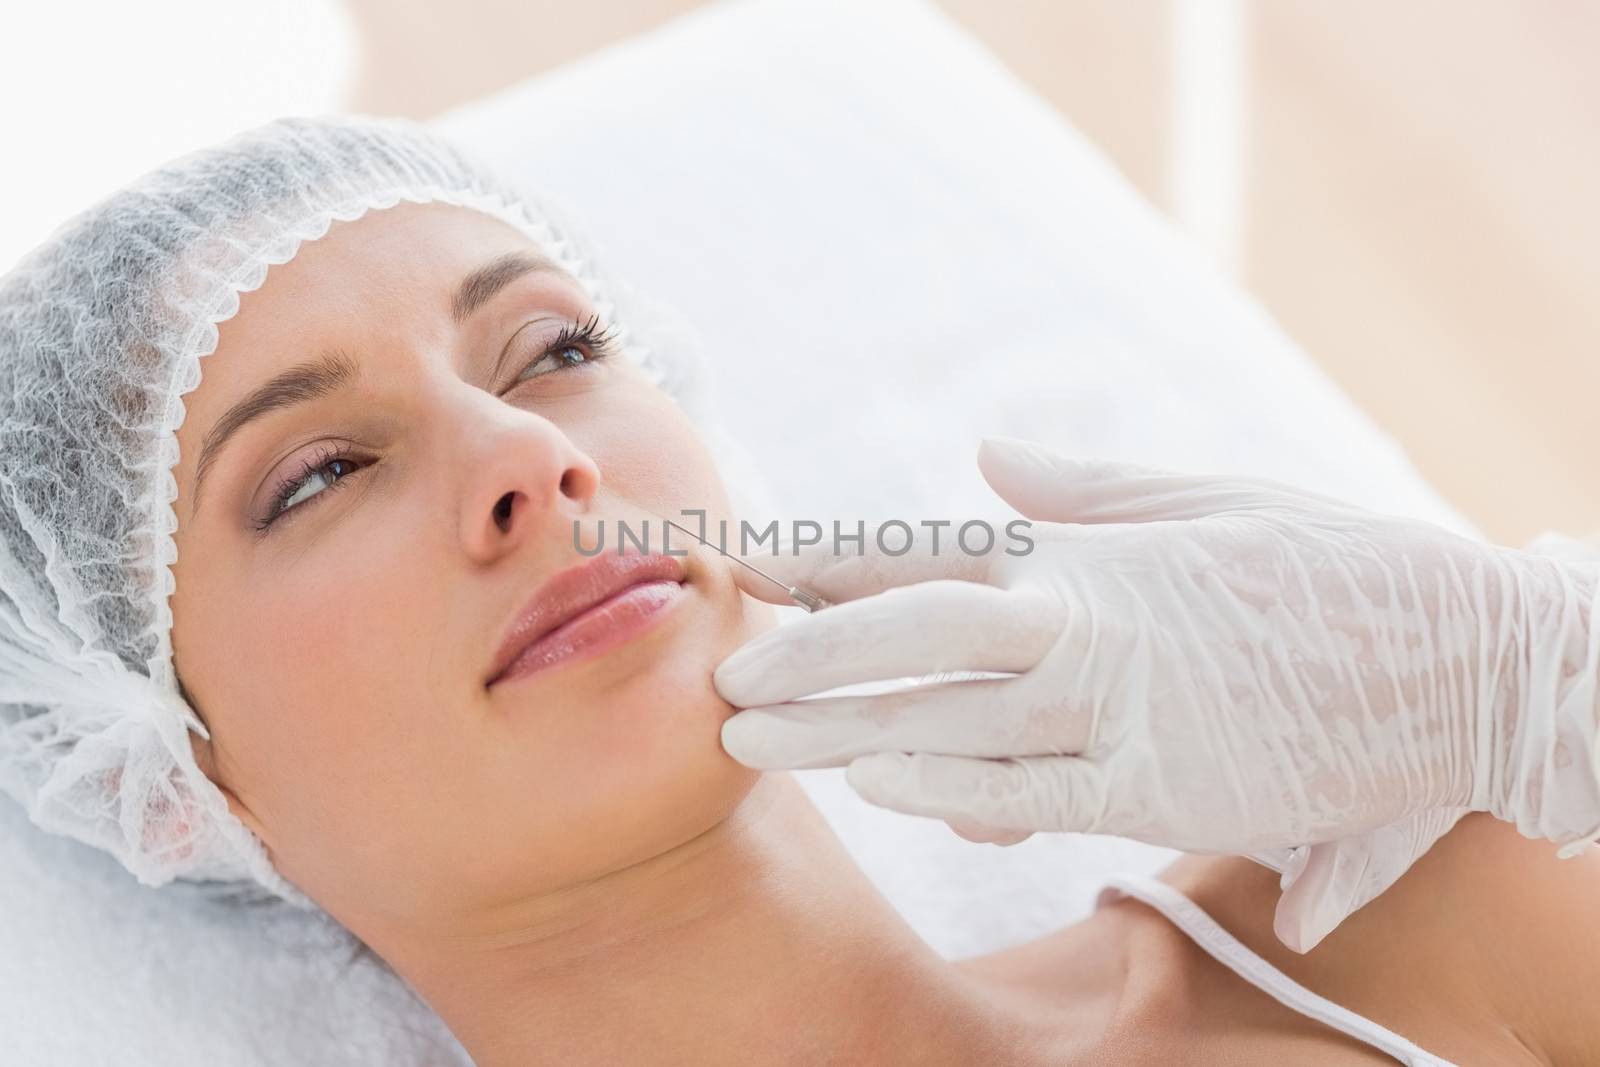 Woman recieving botox injection by Wavebreakmedia